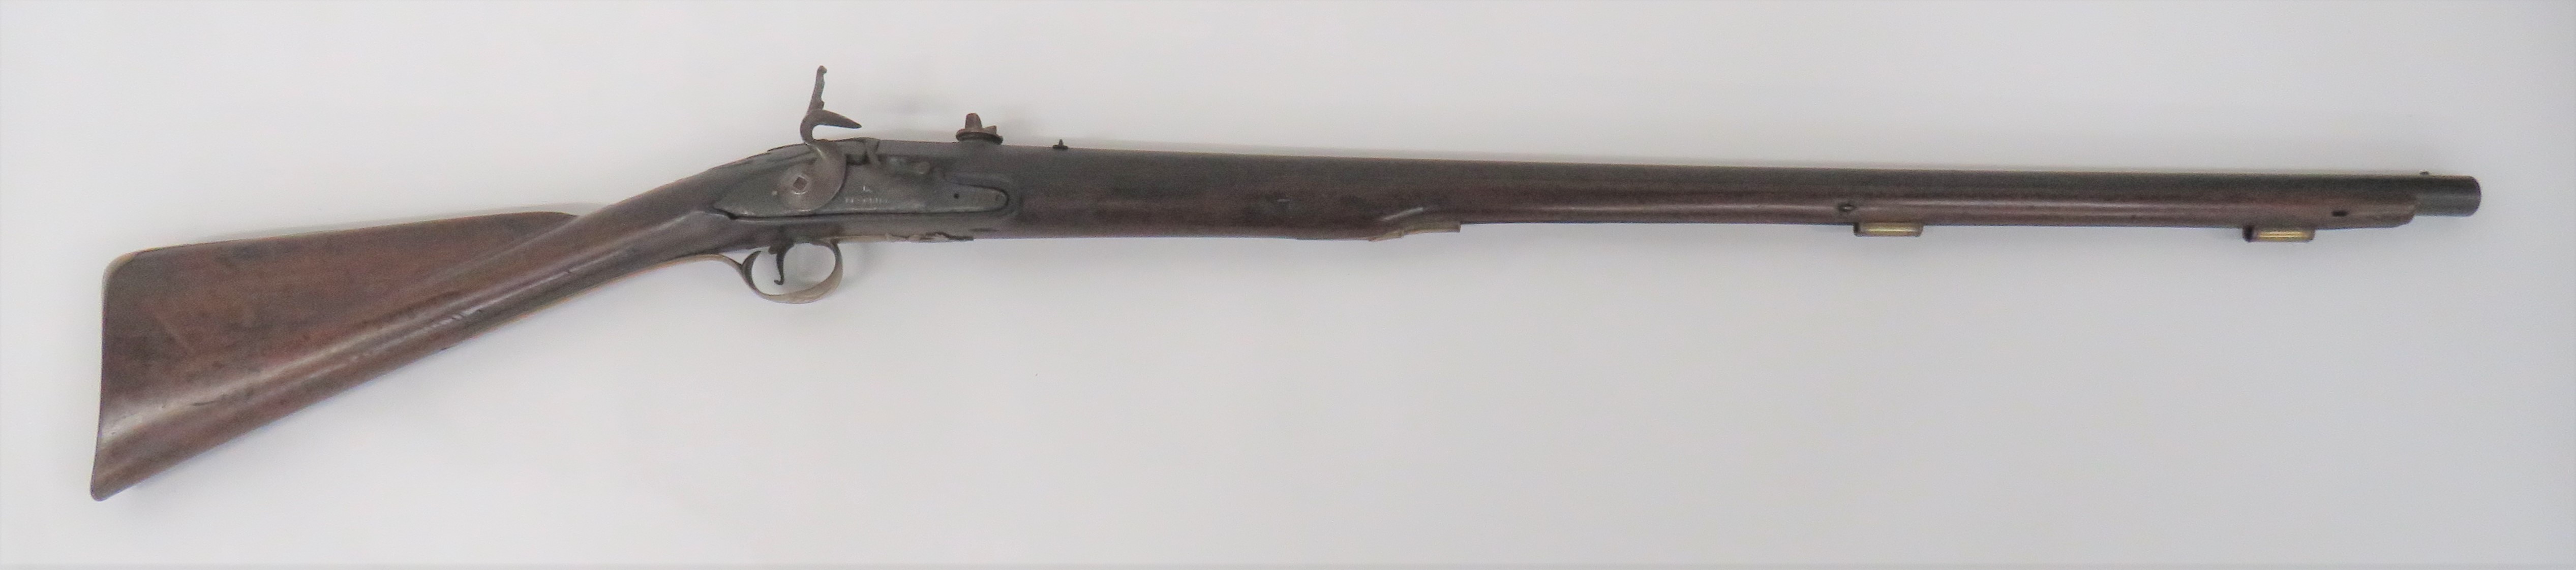 Rare Late 18th Century Breech Loading Flintlock Rifle 20 bore, 33 3/4 inch, rifled barrel.  Front